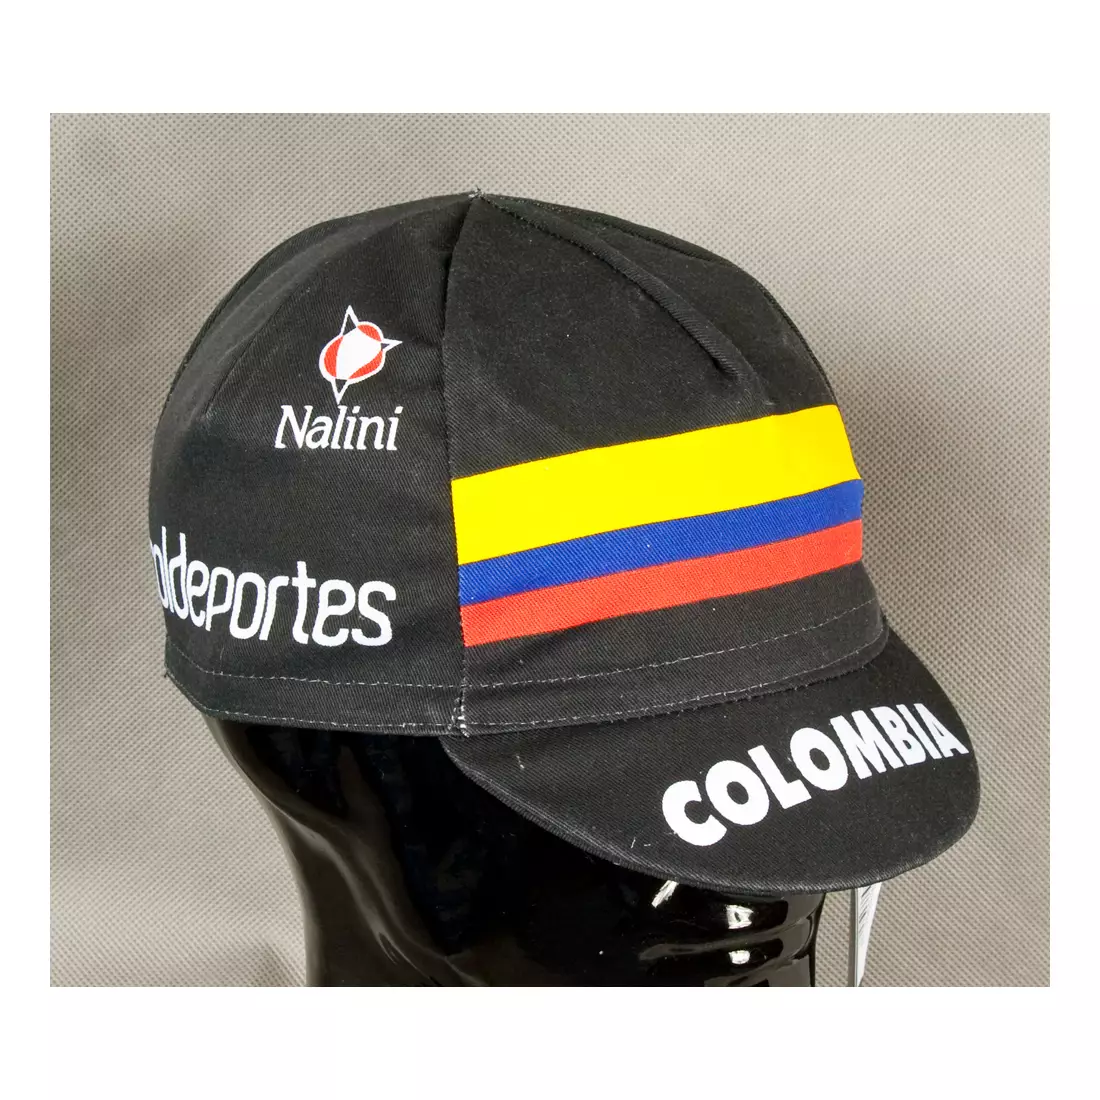 NALINI SS15 - TEAM COLOMBIA 2015 – cap